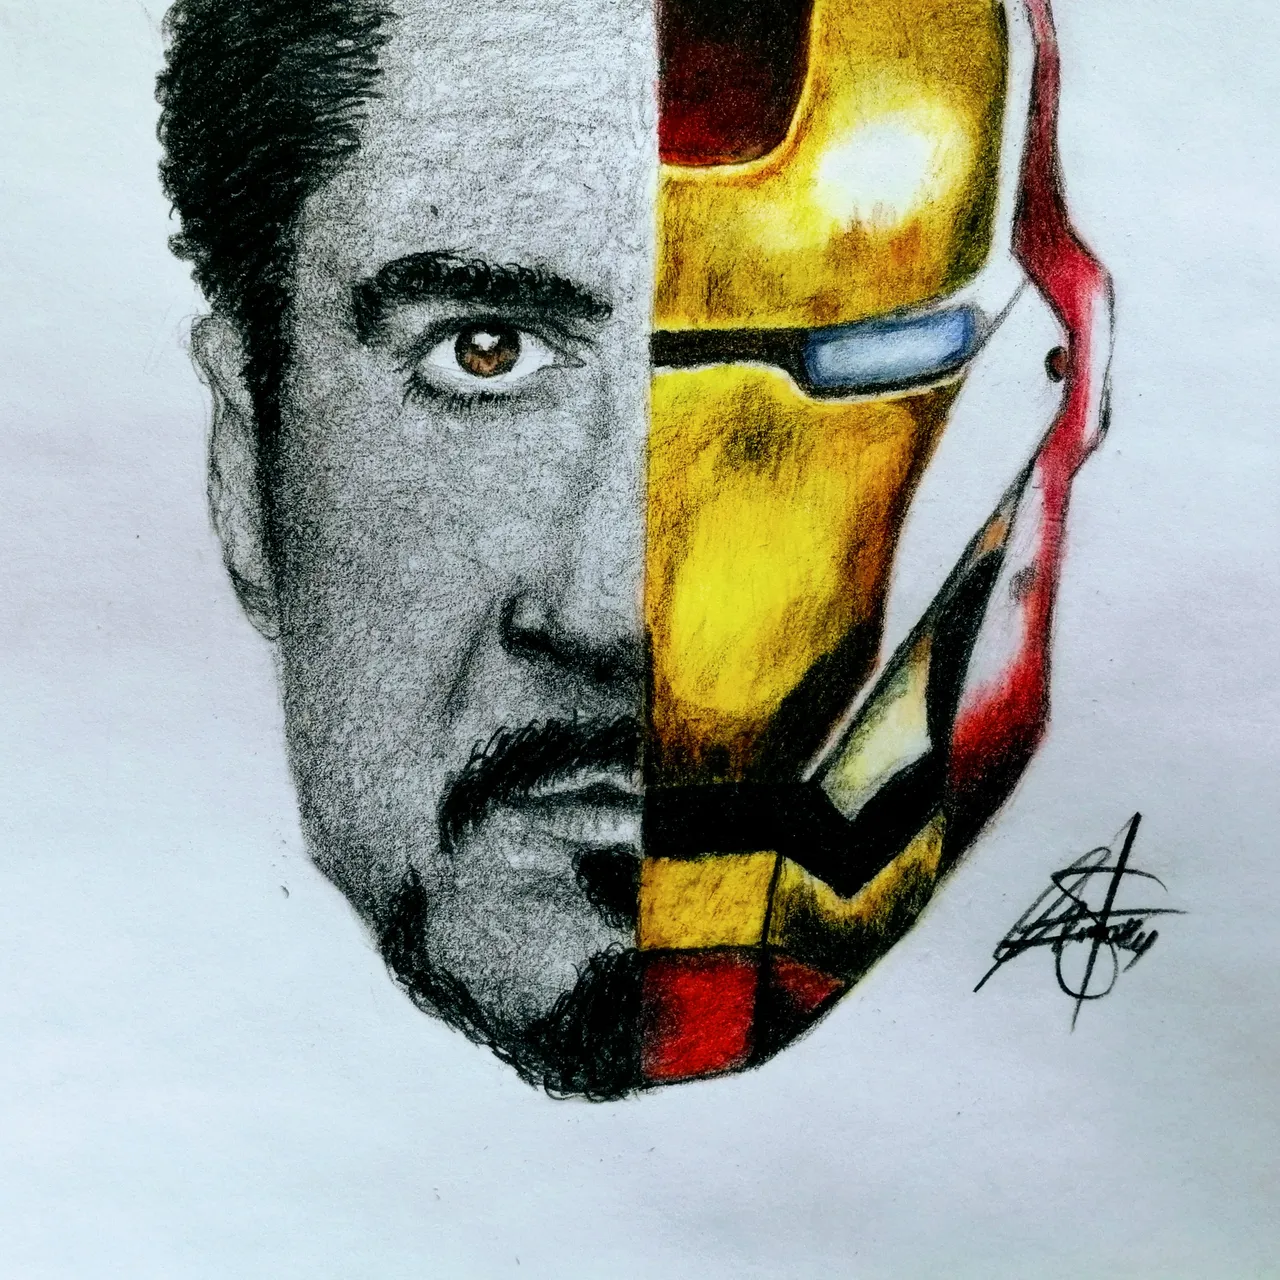 Iron Man - Drawing Skill